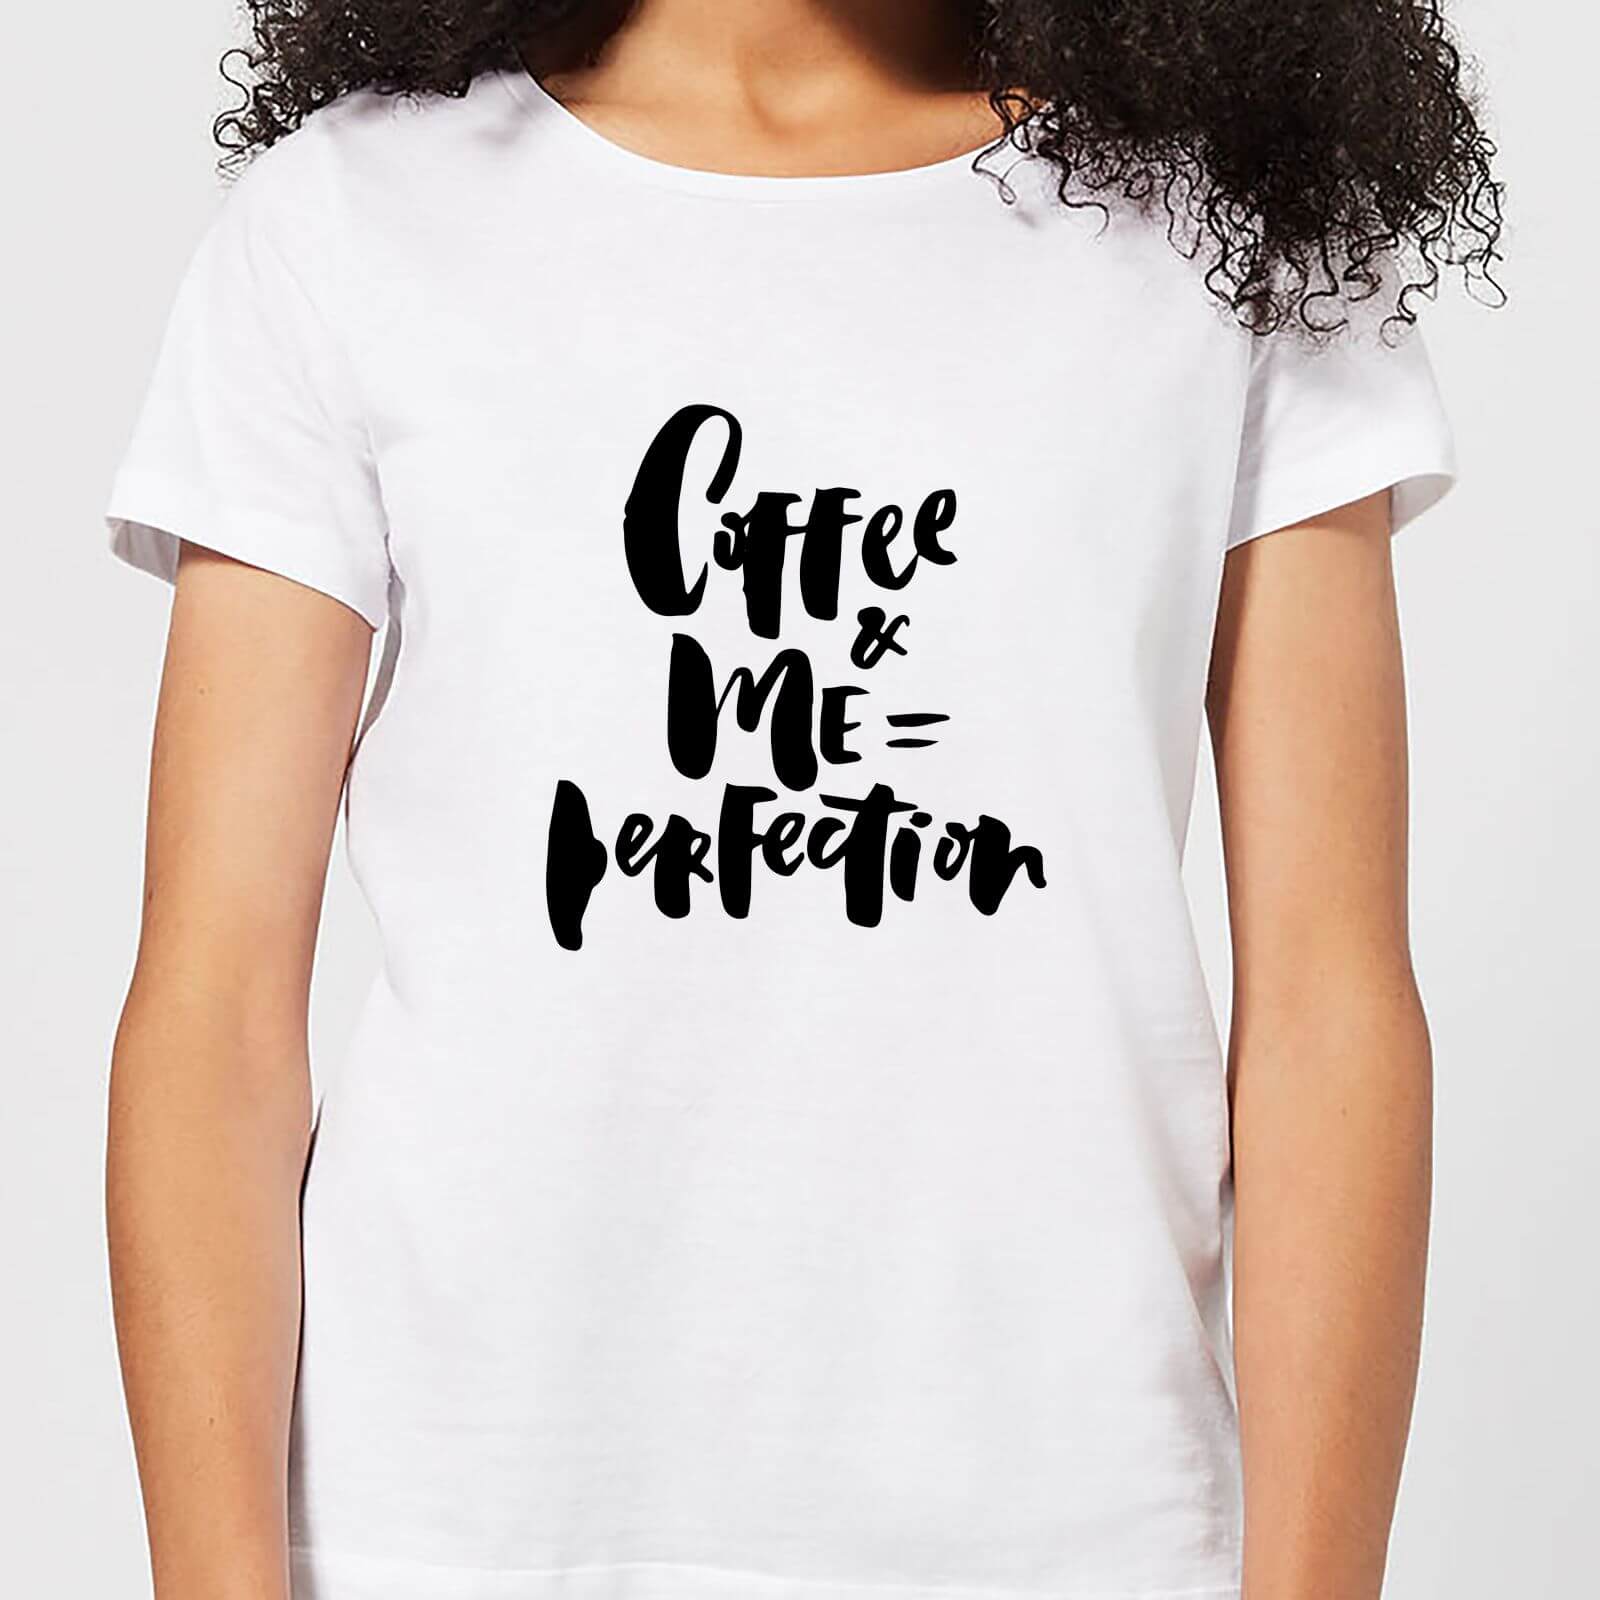 Coffee+me=perfection Women's T-Shirt - White - S - White